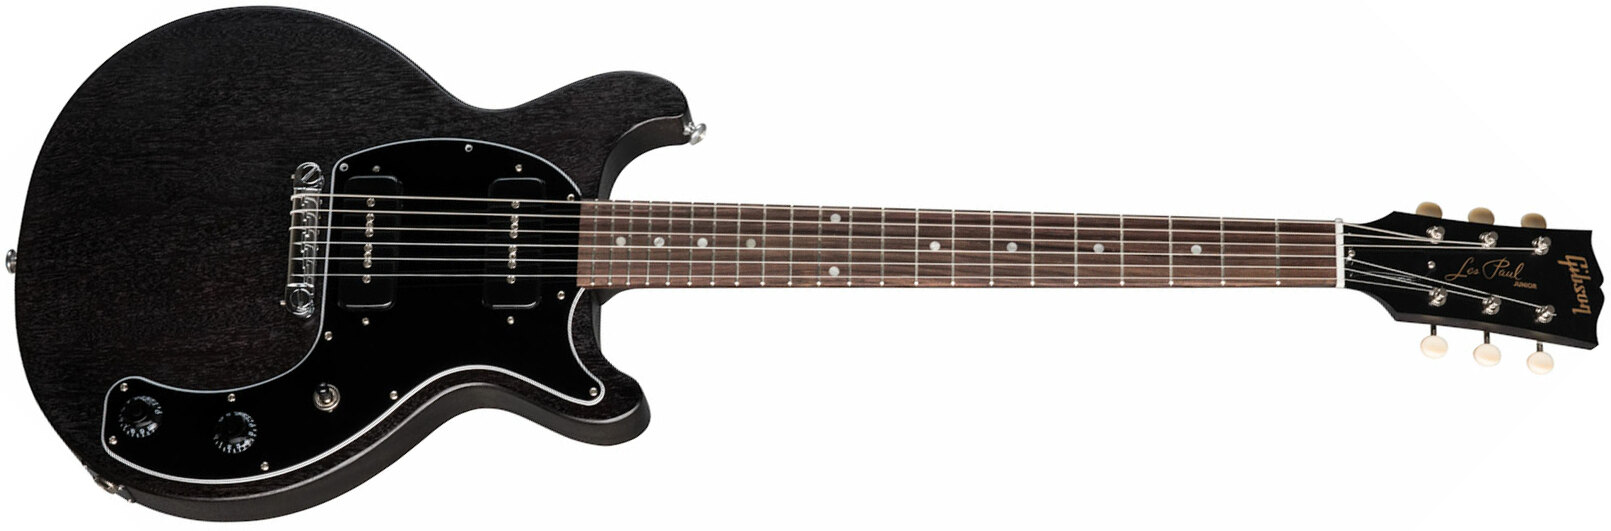 Gibson Les Paul Special Tribute DC - worn ebony black Double cut